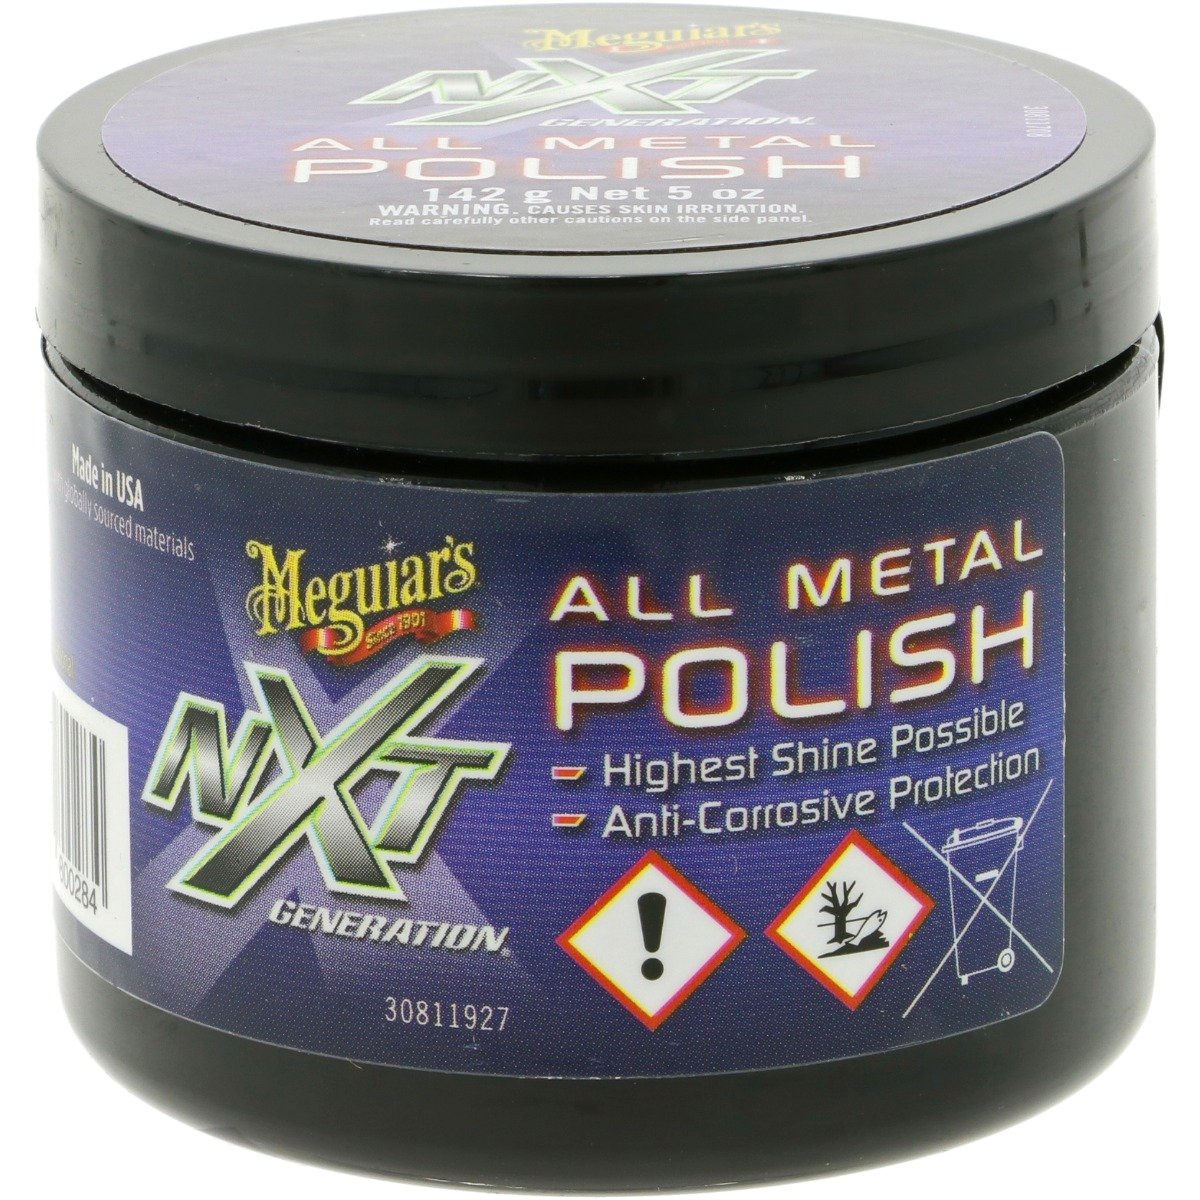 NXT Generation All Metal Polish - 142 g